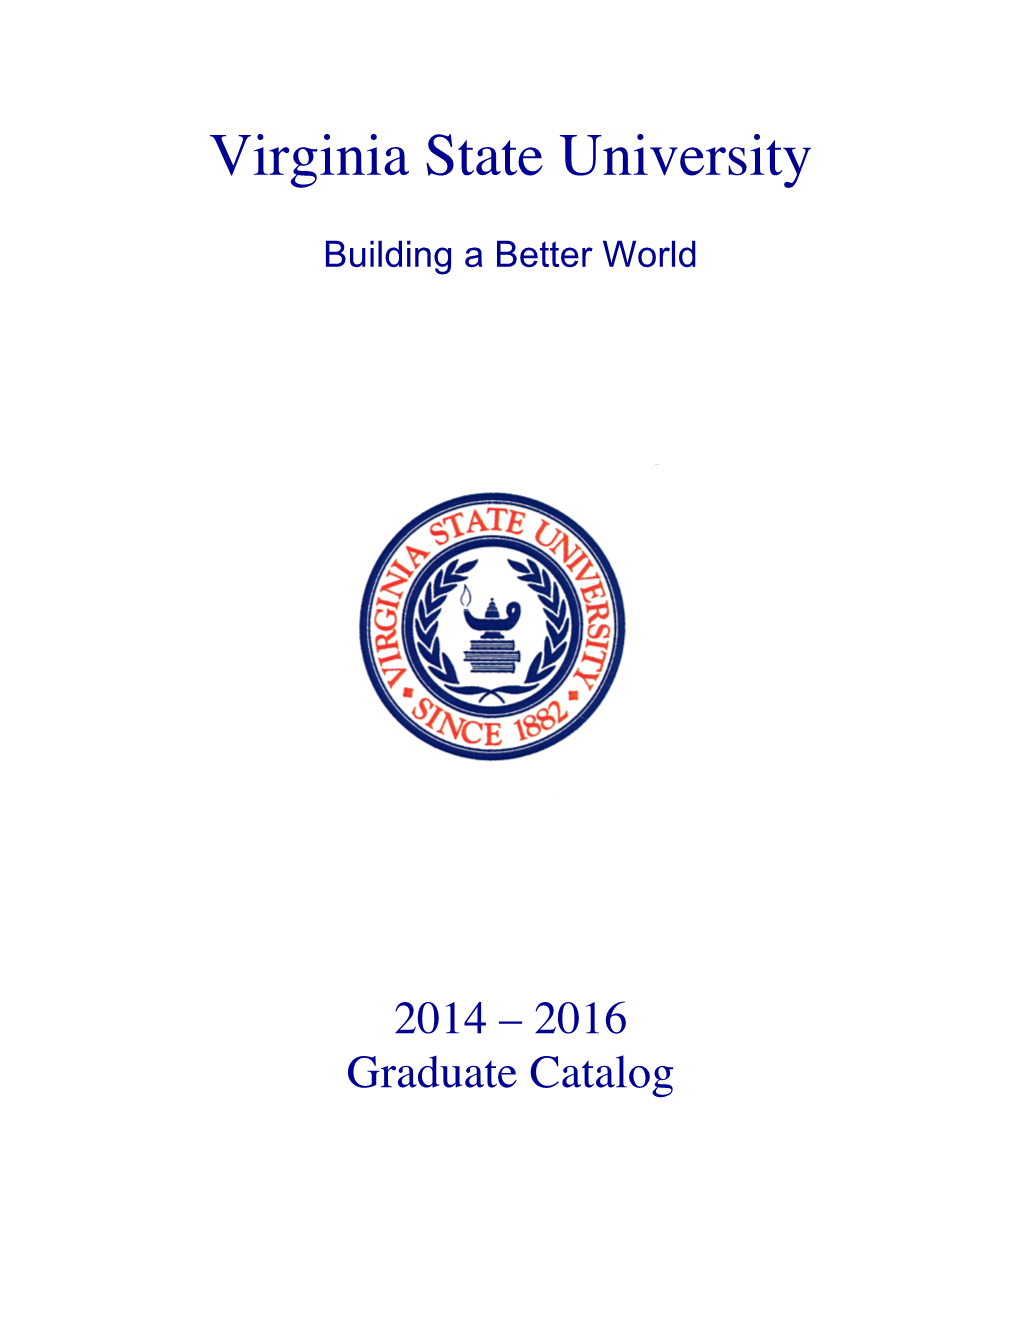 Complete 2014-2016 Graduate Catalog